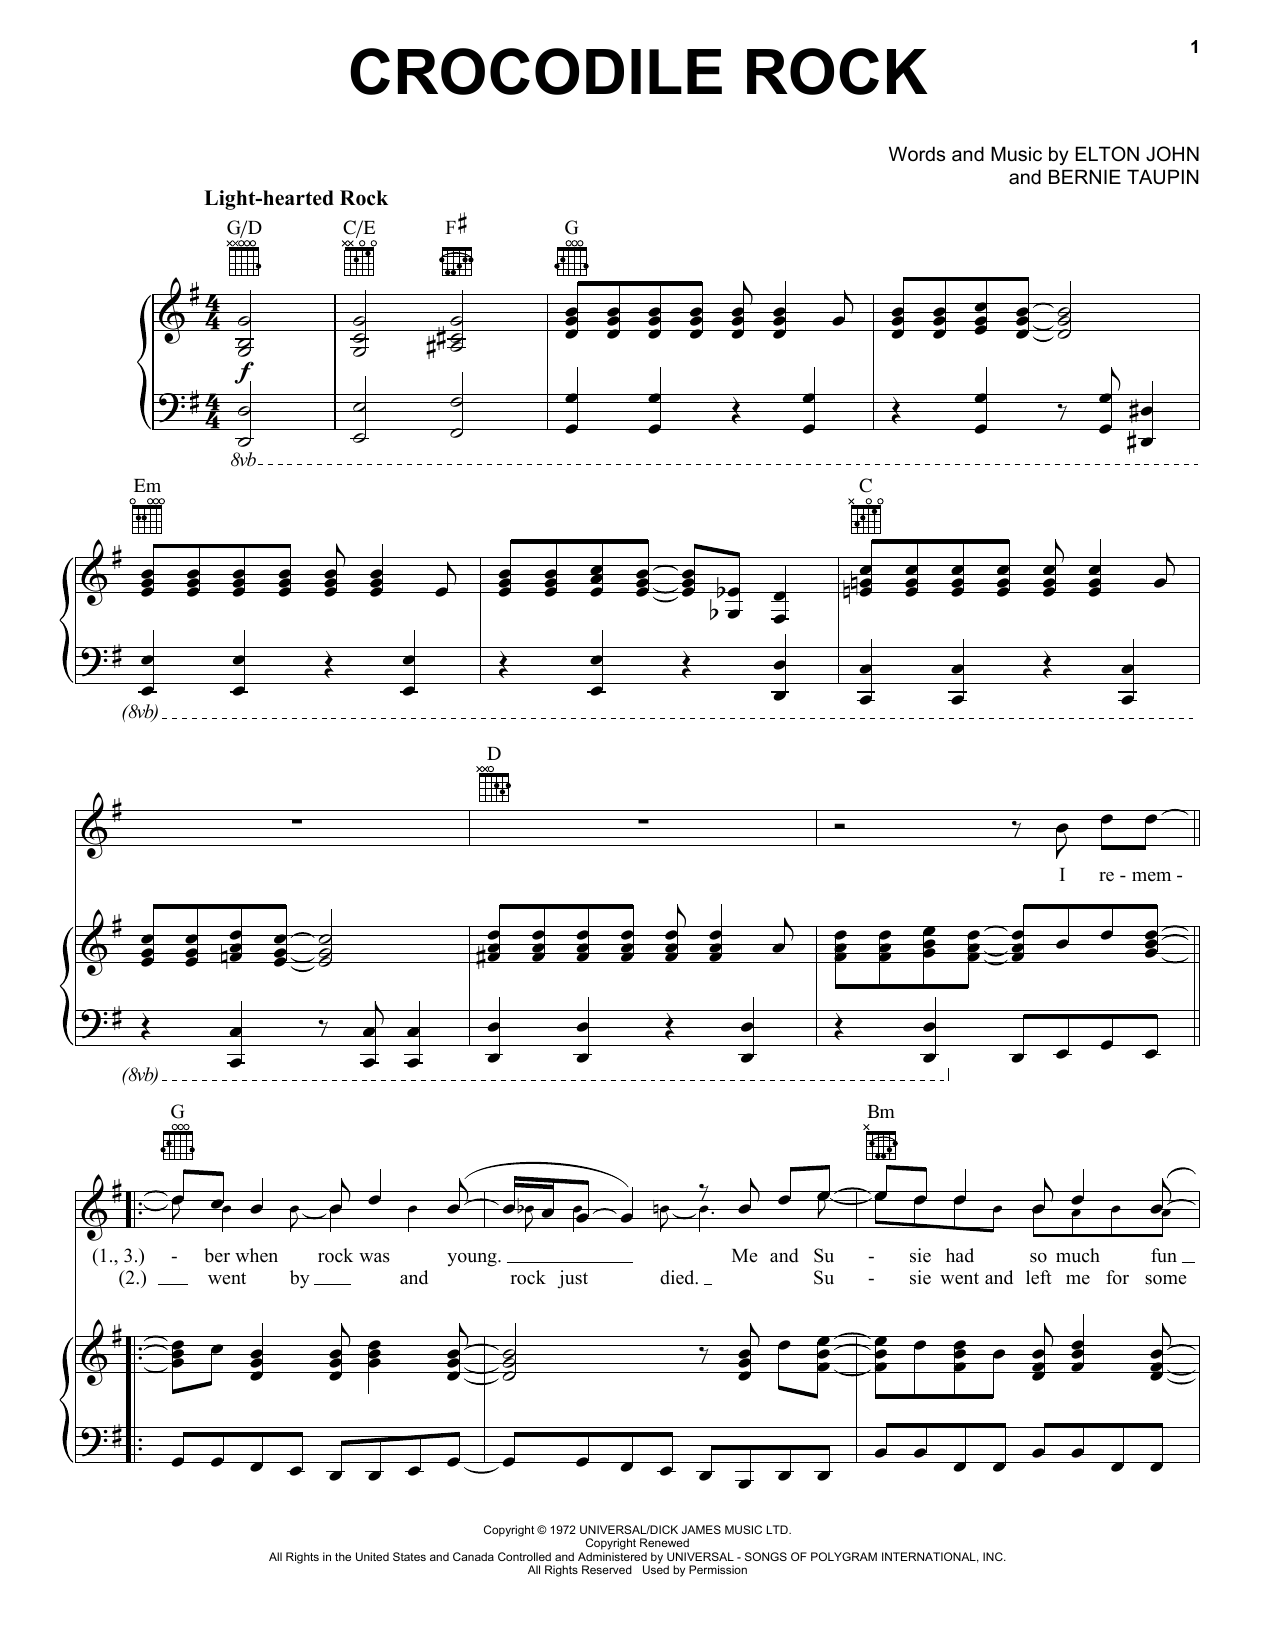 Elton John Crocodile Rock Sheet Music Notes & Chords for Clarinet - Download or Print PDF